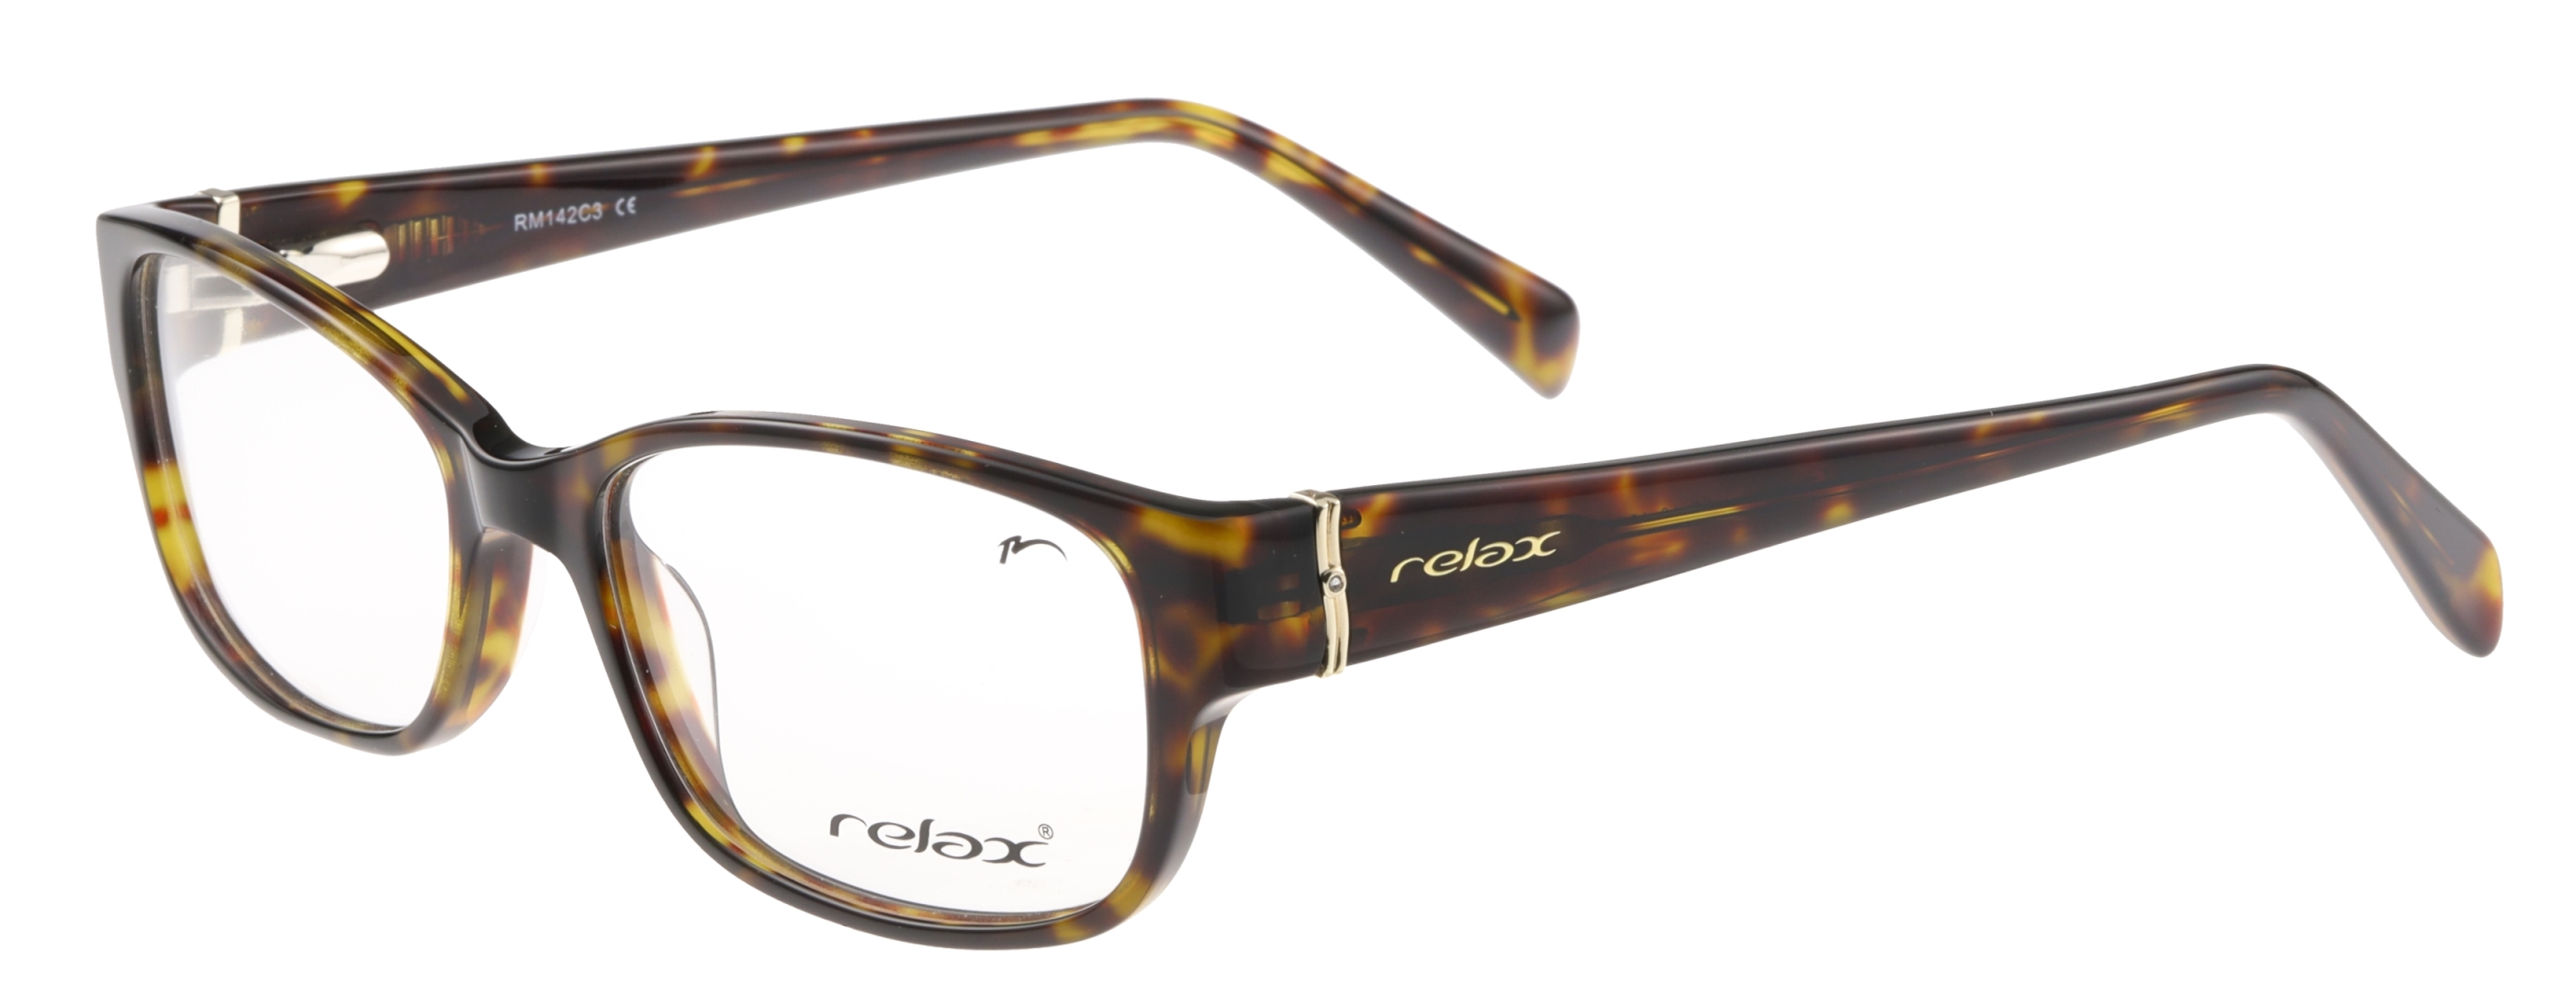 Optical frames Relax Venice RM142C3